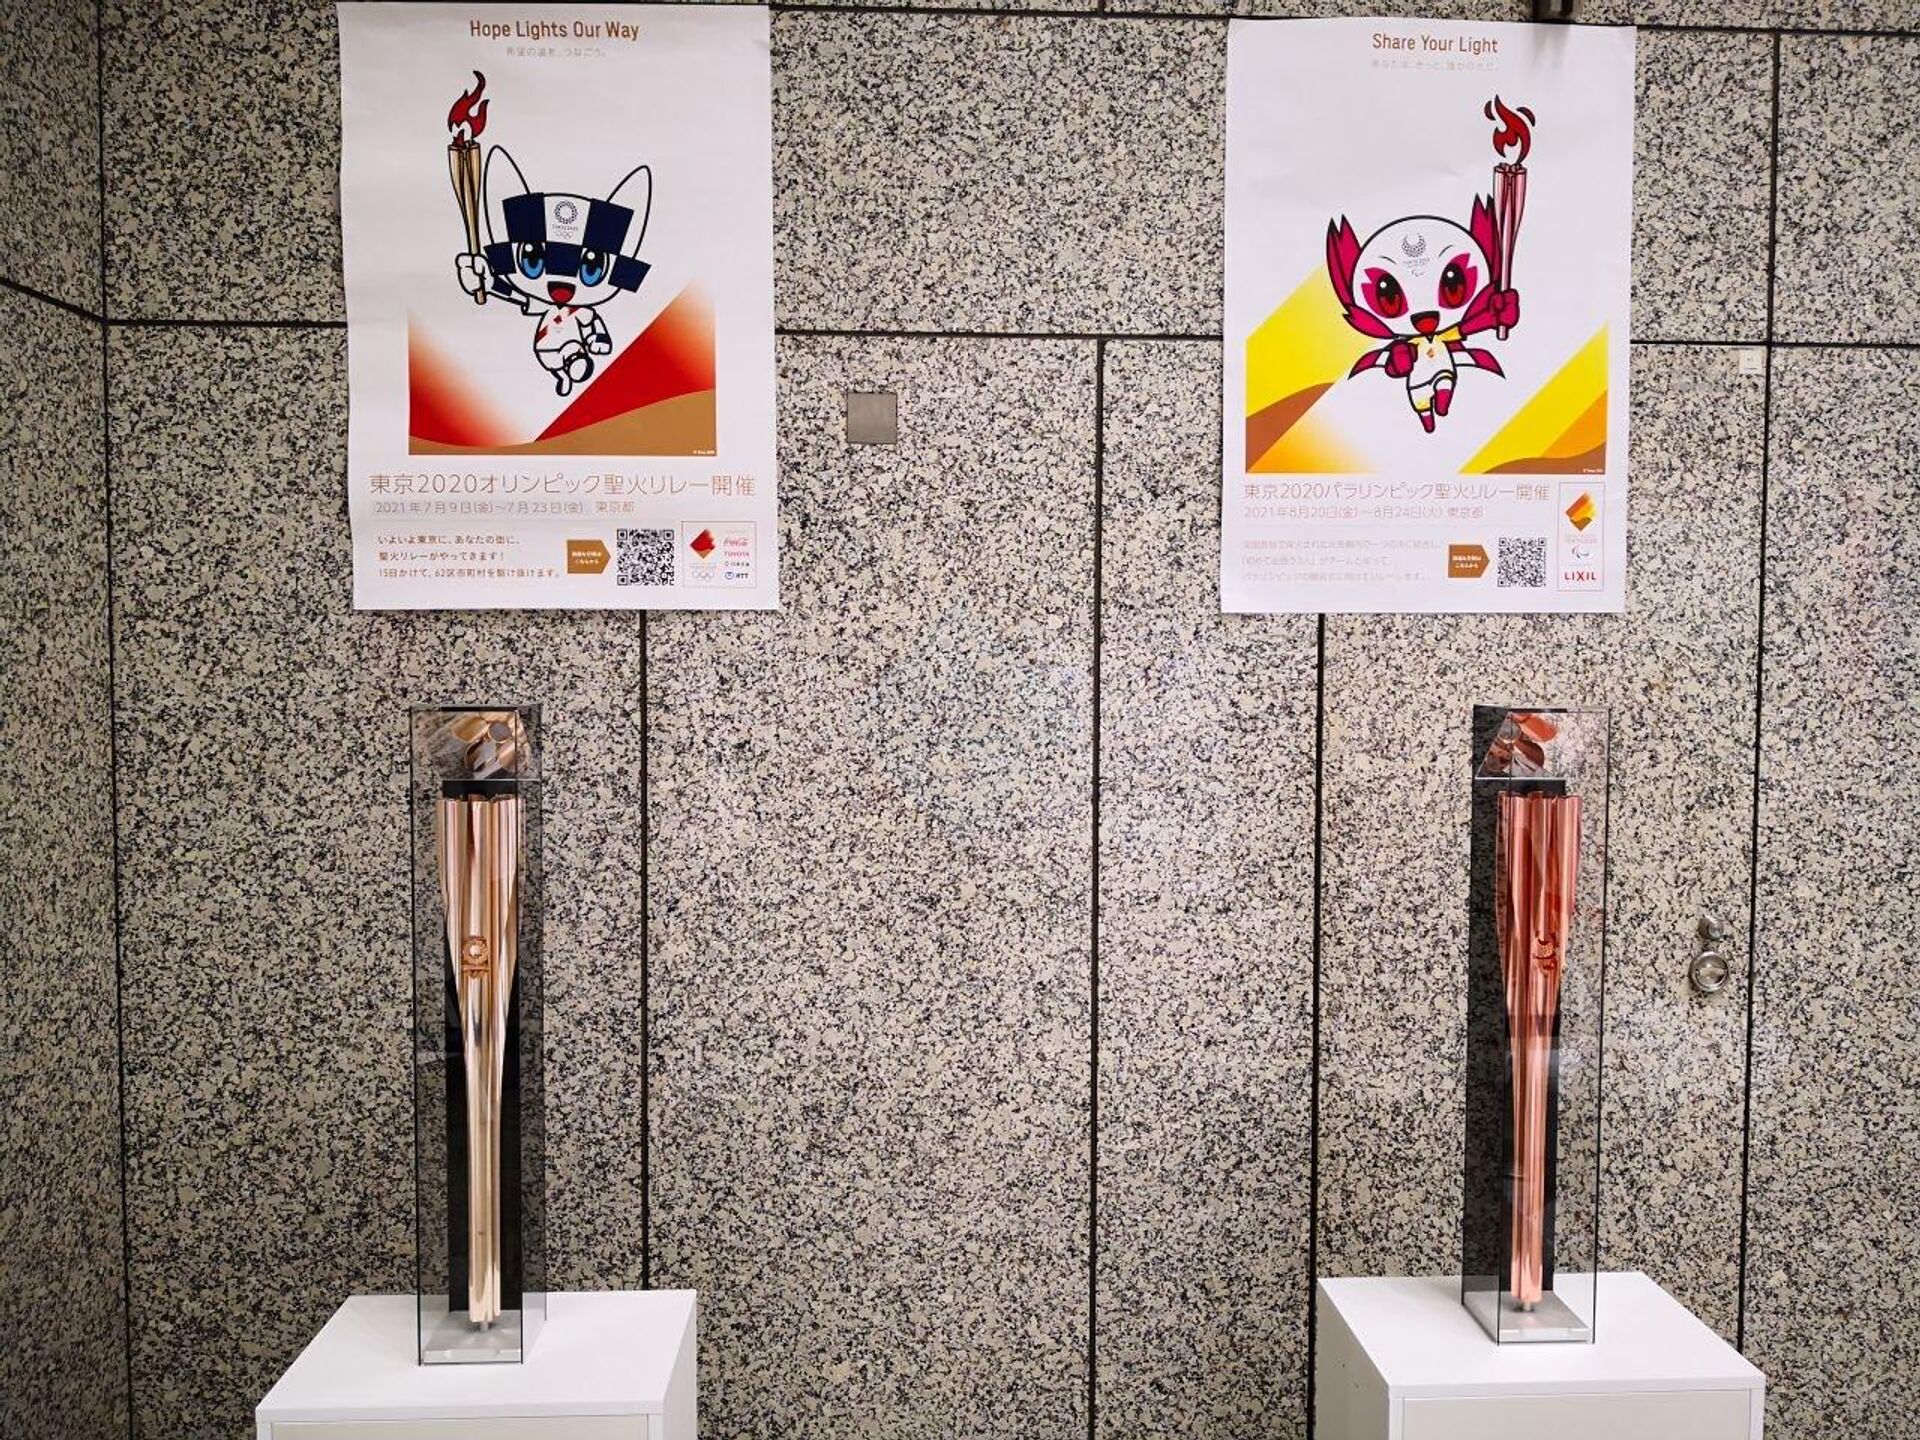 Факелы отложенных на год из-за COVID-19 Олимпиады-2020 и Паралимпийских игр в Токио  - РИА Новости, 1920, 23.12.2020